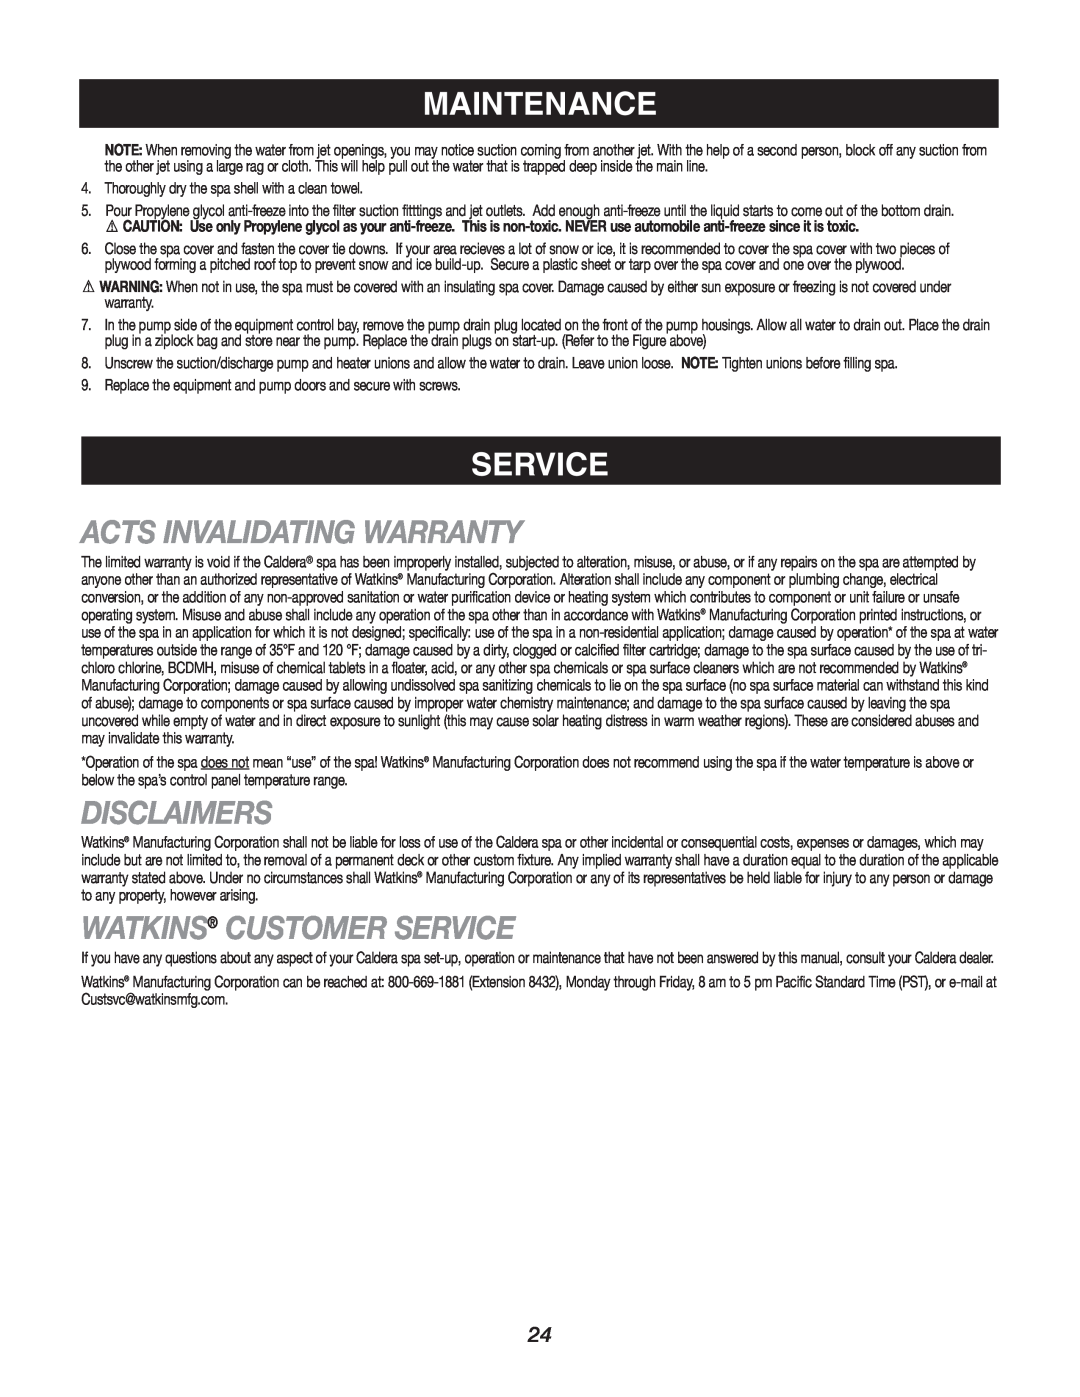 Caldera Highland Series owner manual Acts Invalidating Warranty, Disclaimers, Watkins Customer Service, Maintenance 